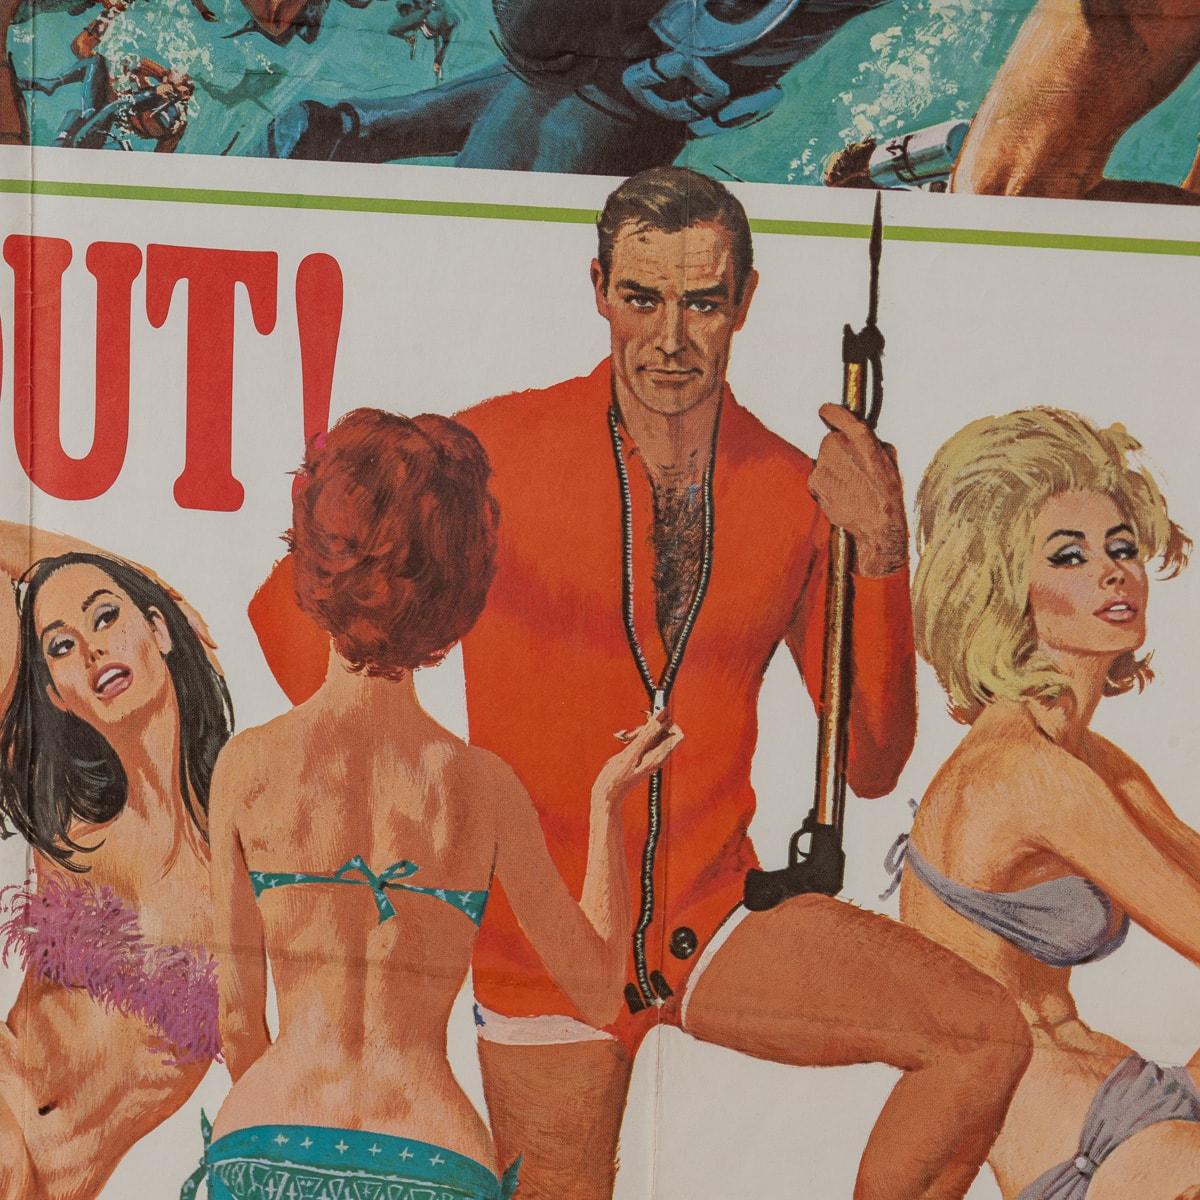 Original U.S James Bond 007 'Thunderball' Poster c.1965 For Sale 8